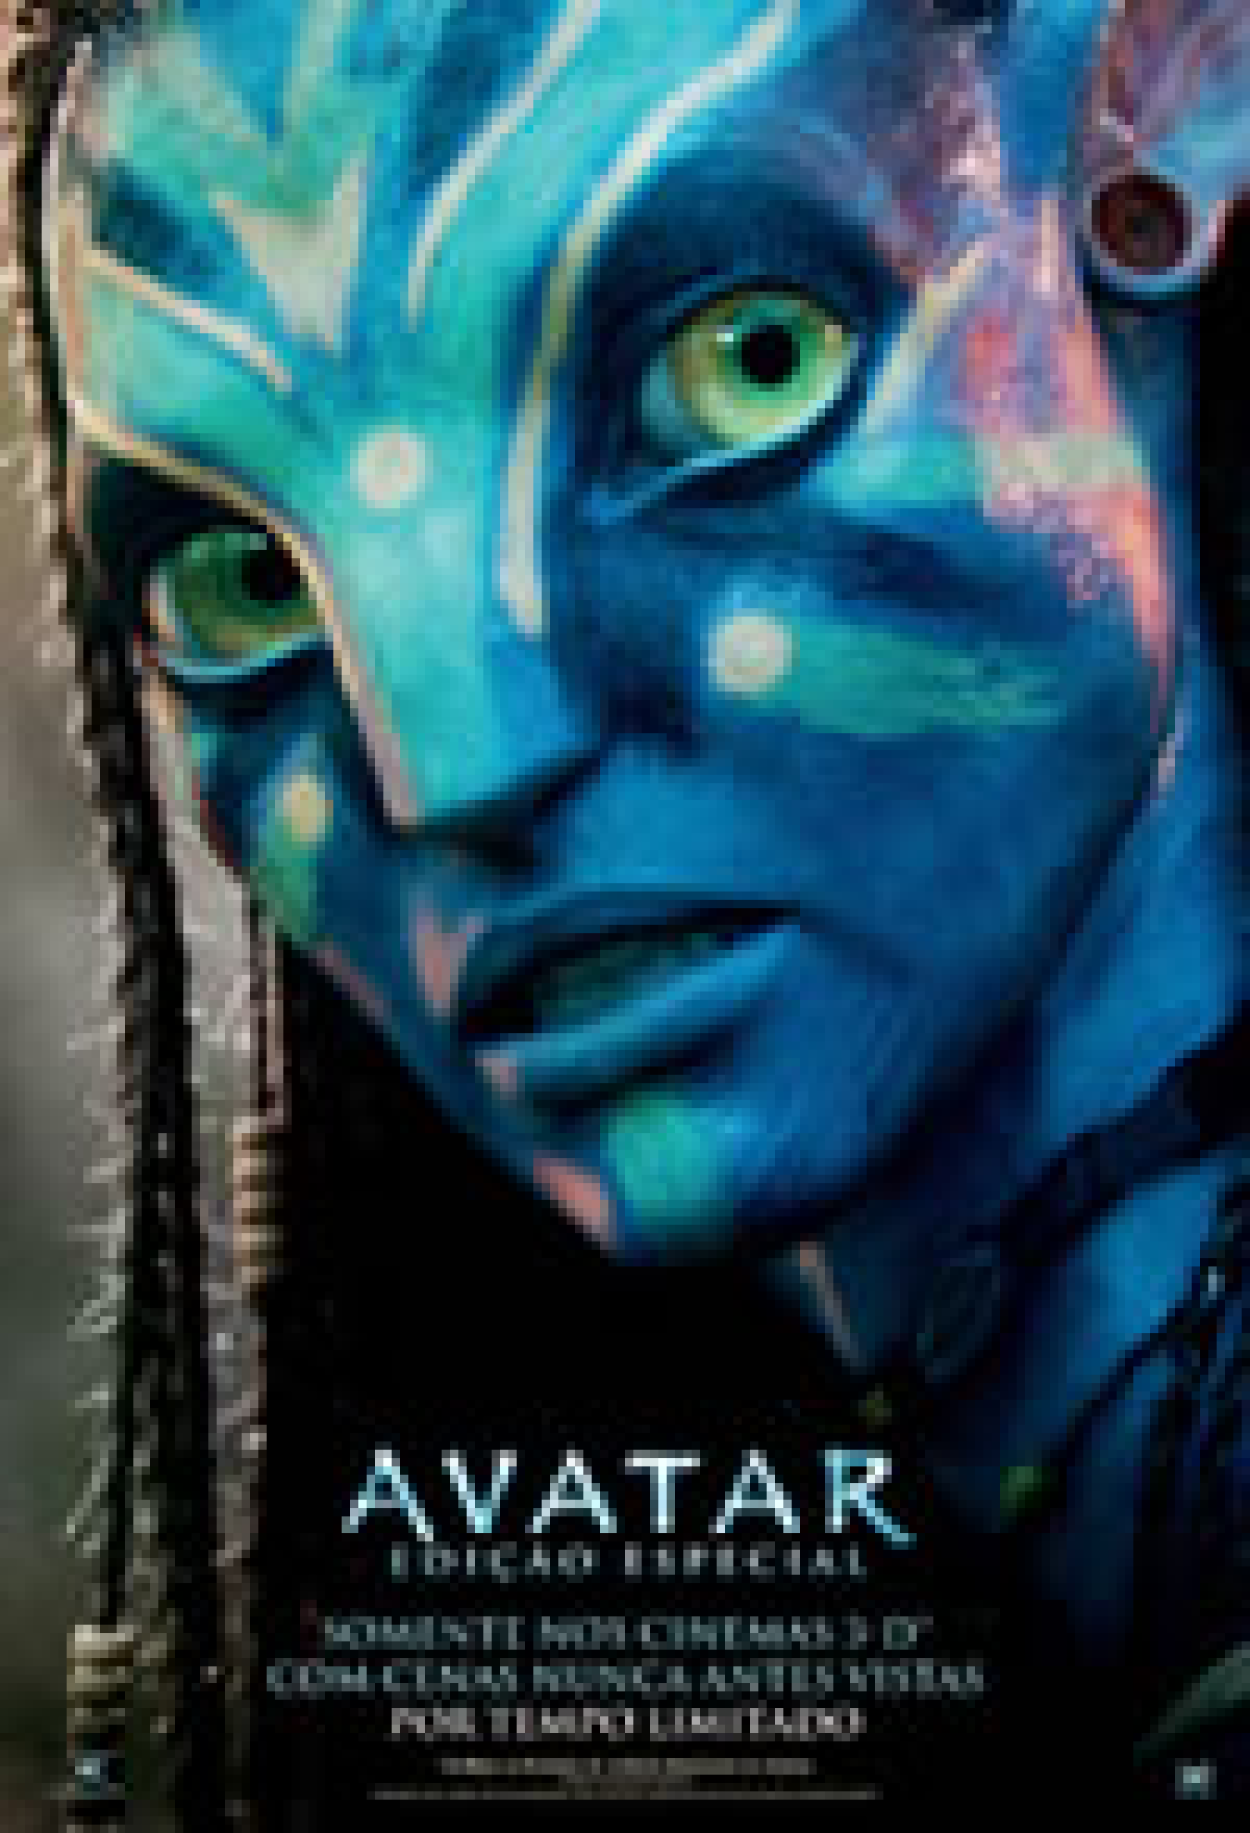 Avatar preto e branco triste - Triste - Menina foto perfil